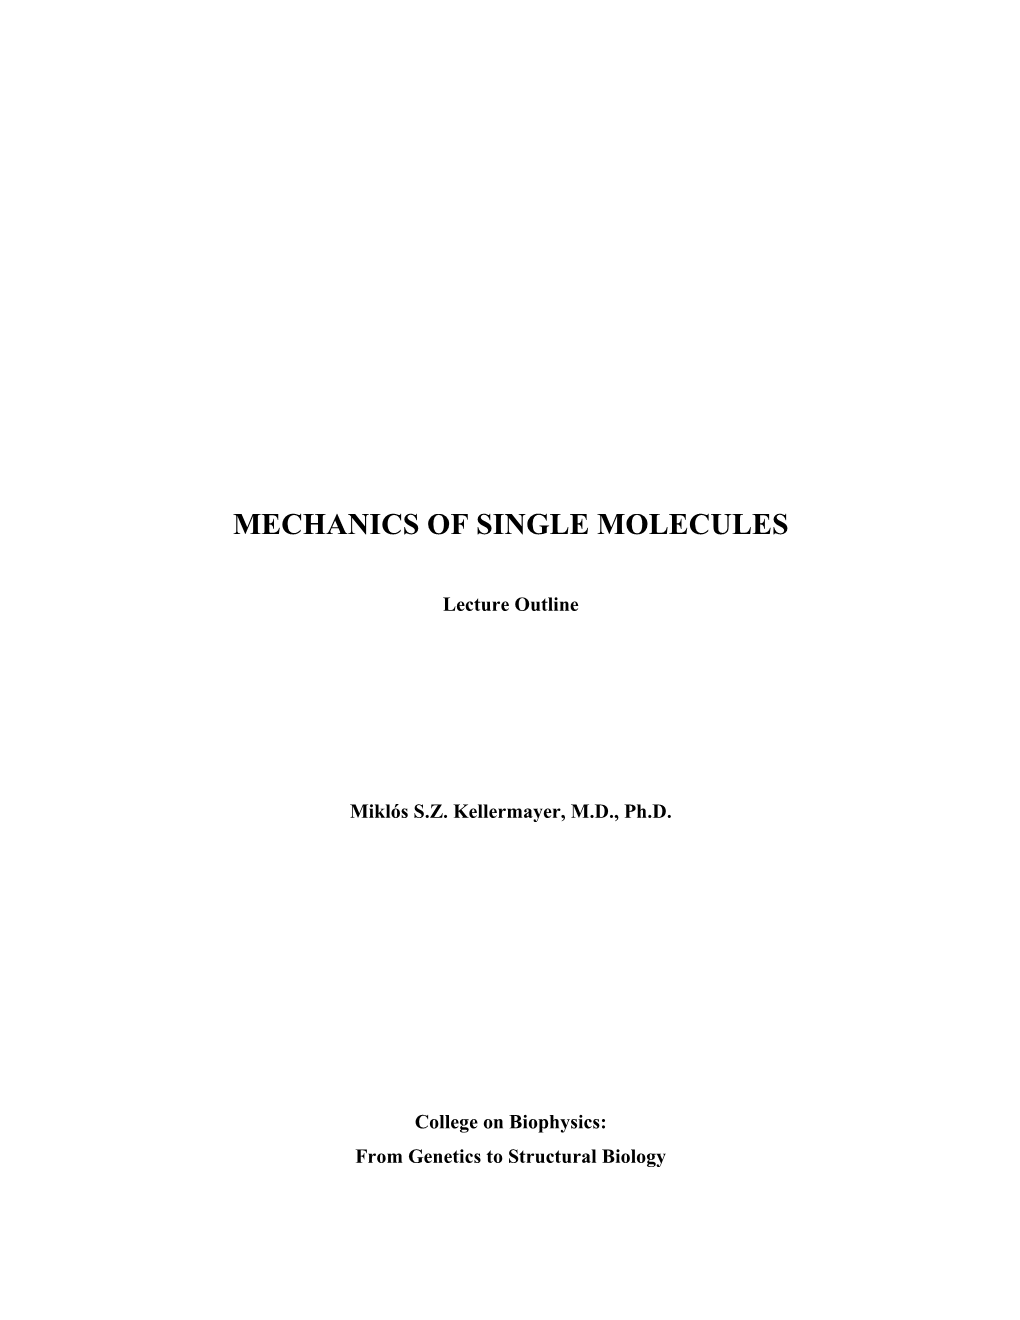 Mechanics of Single Molecules